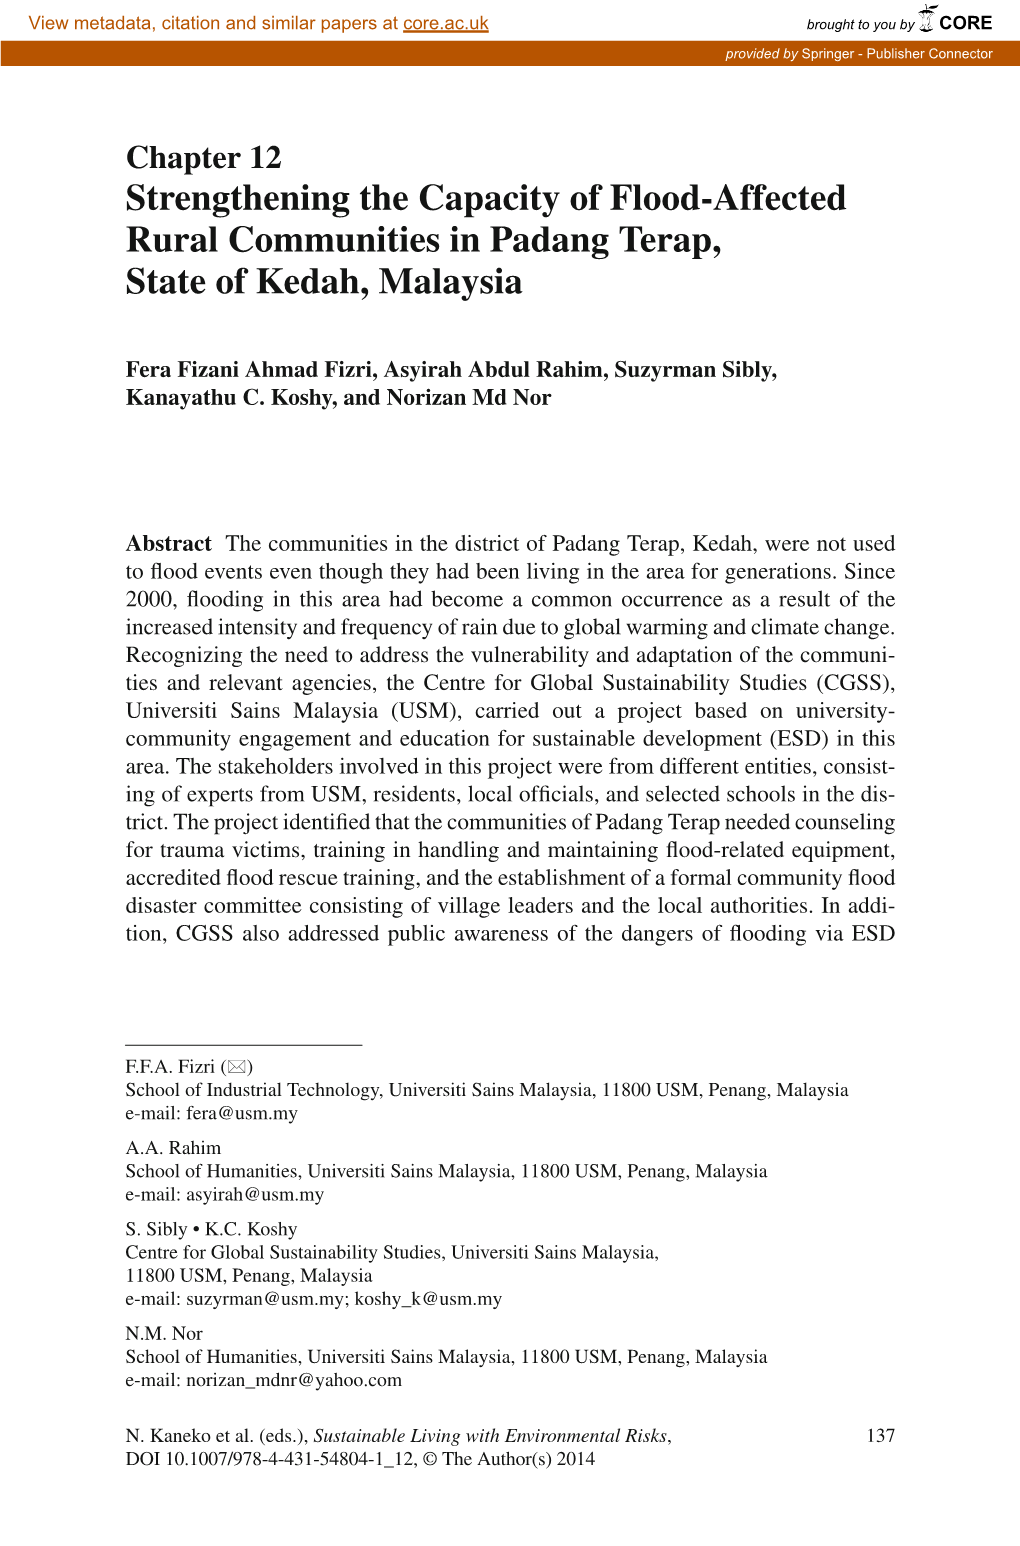 Strengthening the Capacity of Flood-Affected Rural Communities in Padang Terap, State of Kedah, Malaysia